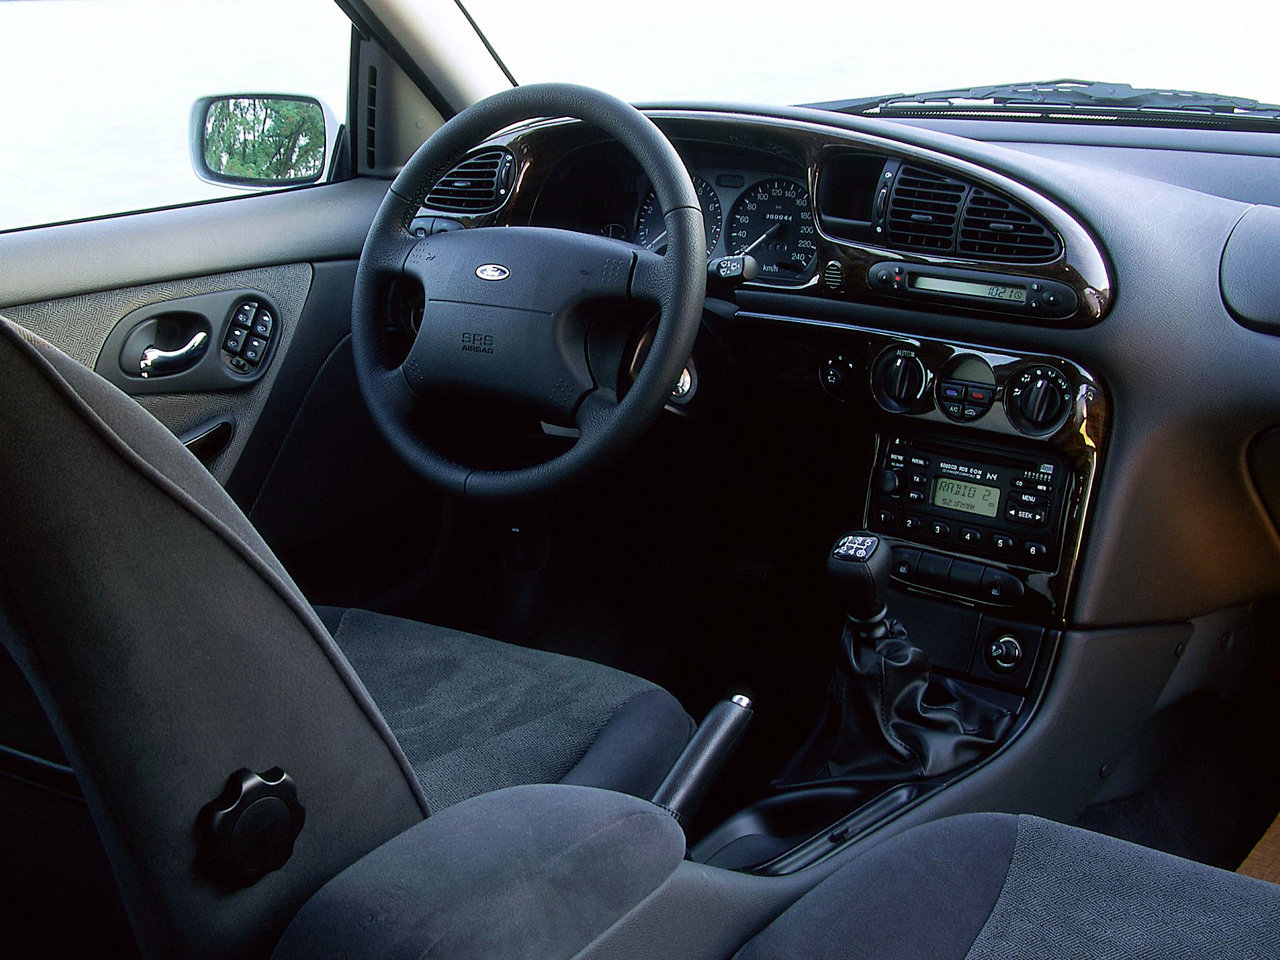 Ford Mondeo Ghia Interior 1996